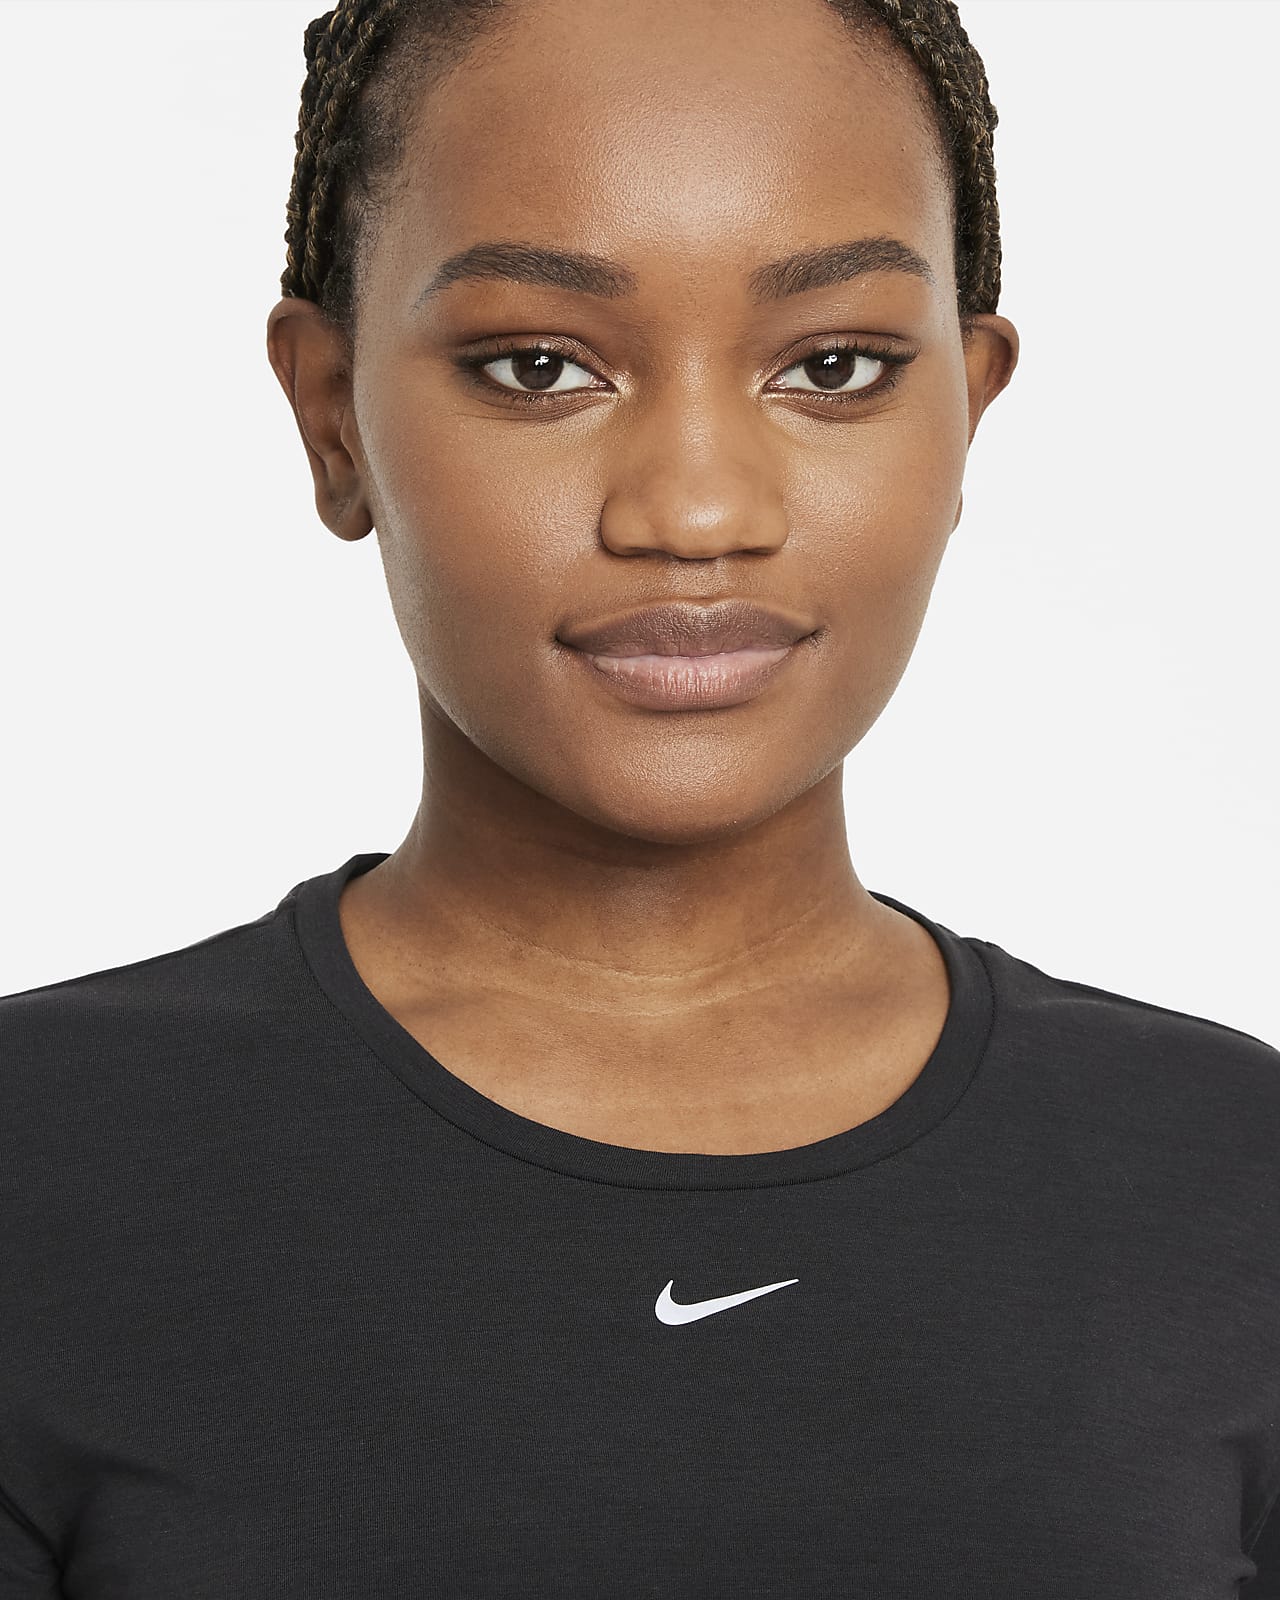 Camiseta Nike Dri-fit One Luxe Feminina